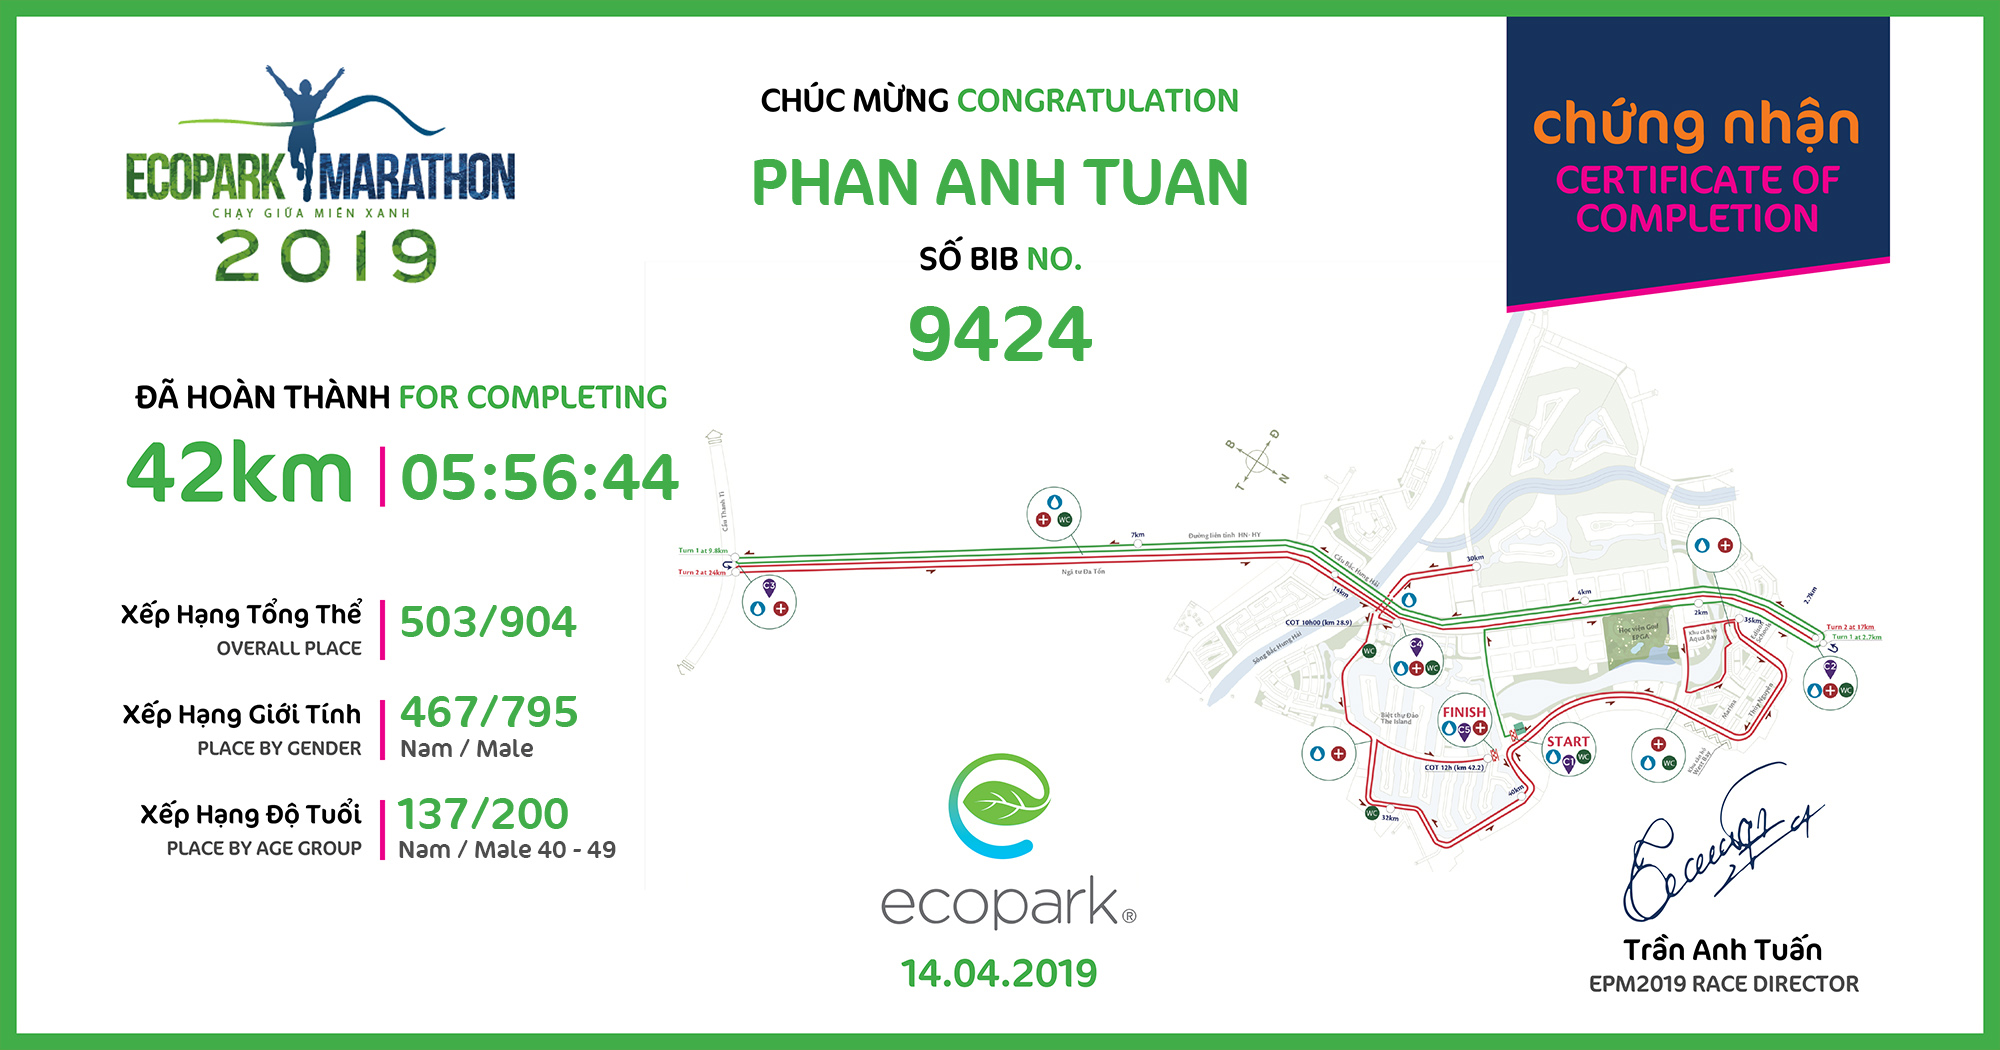 9424 - Phan Anh Tuan